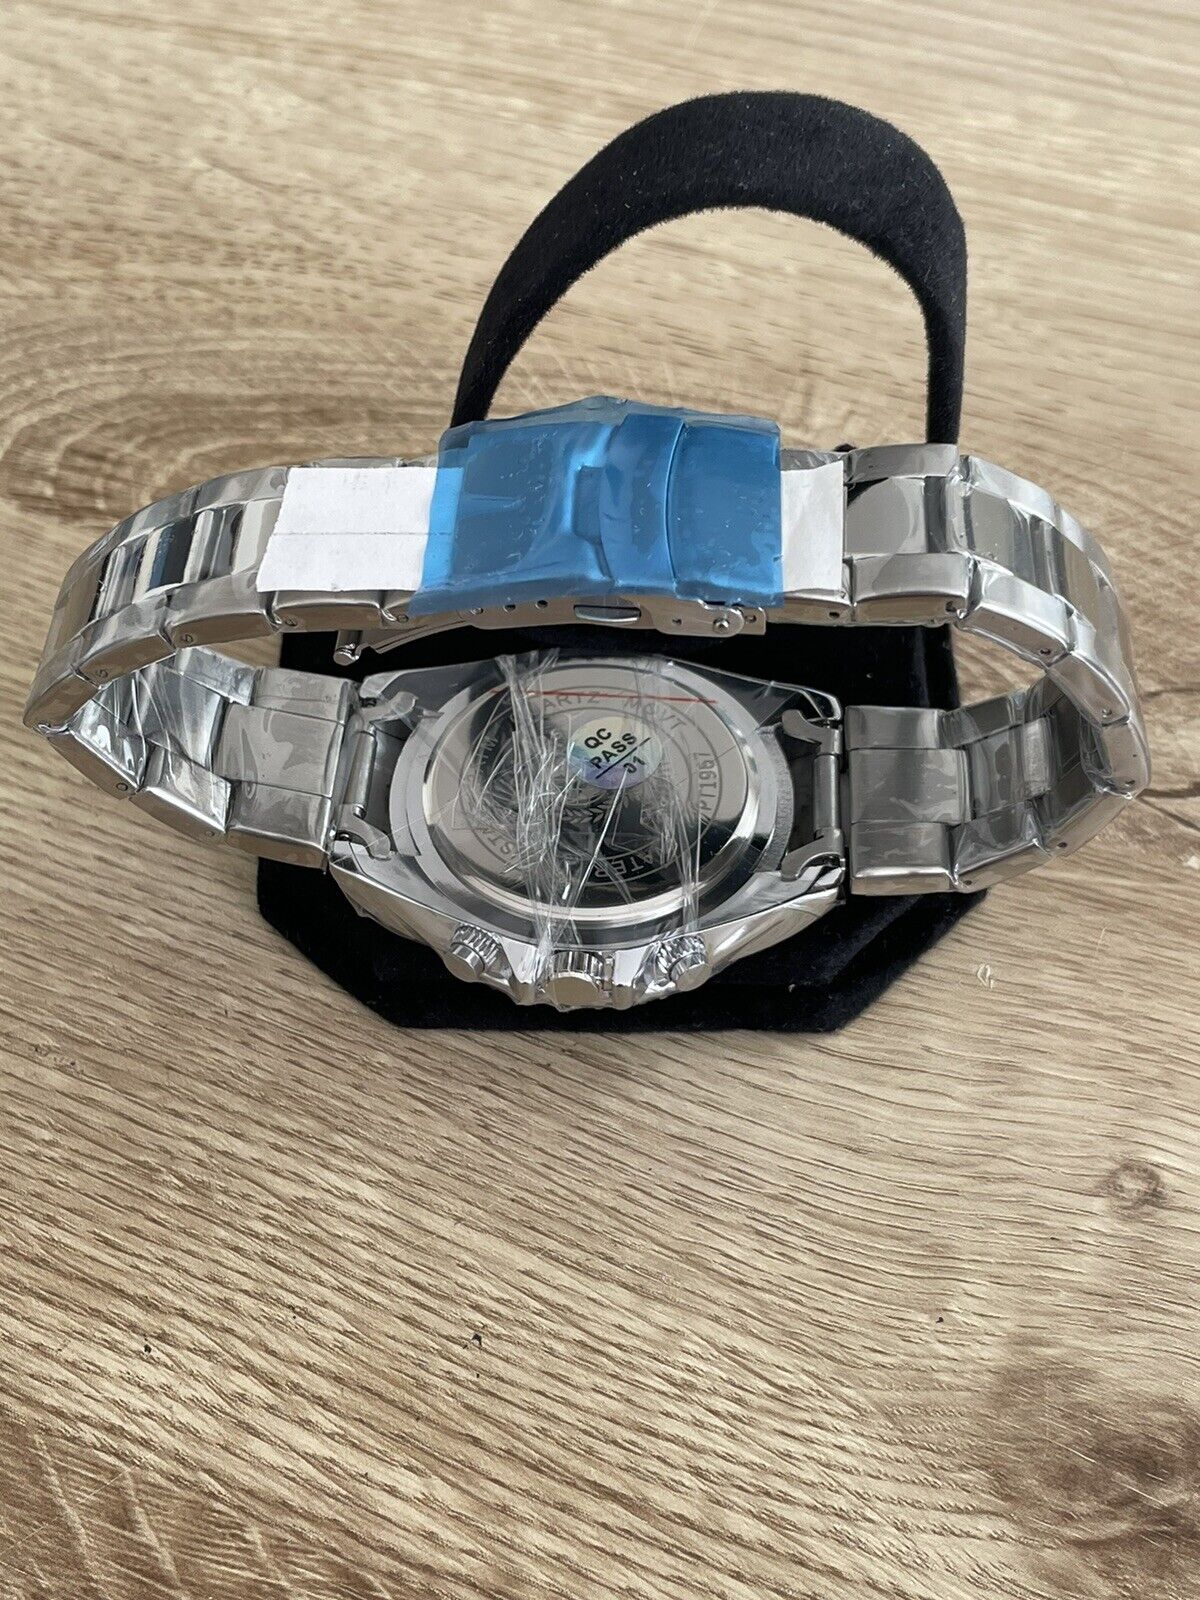 New Primetimes Mariner quartz watch #PT1967 - Westies Watches